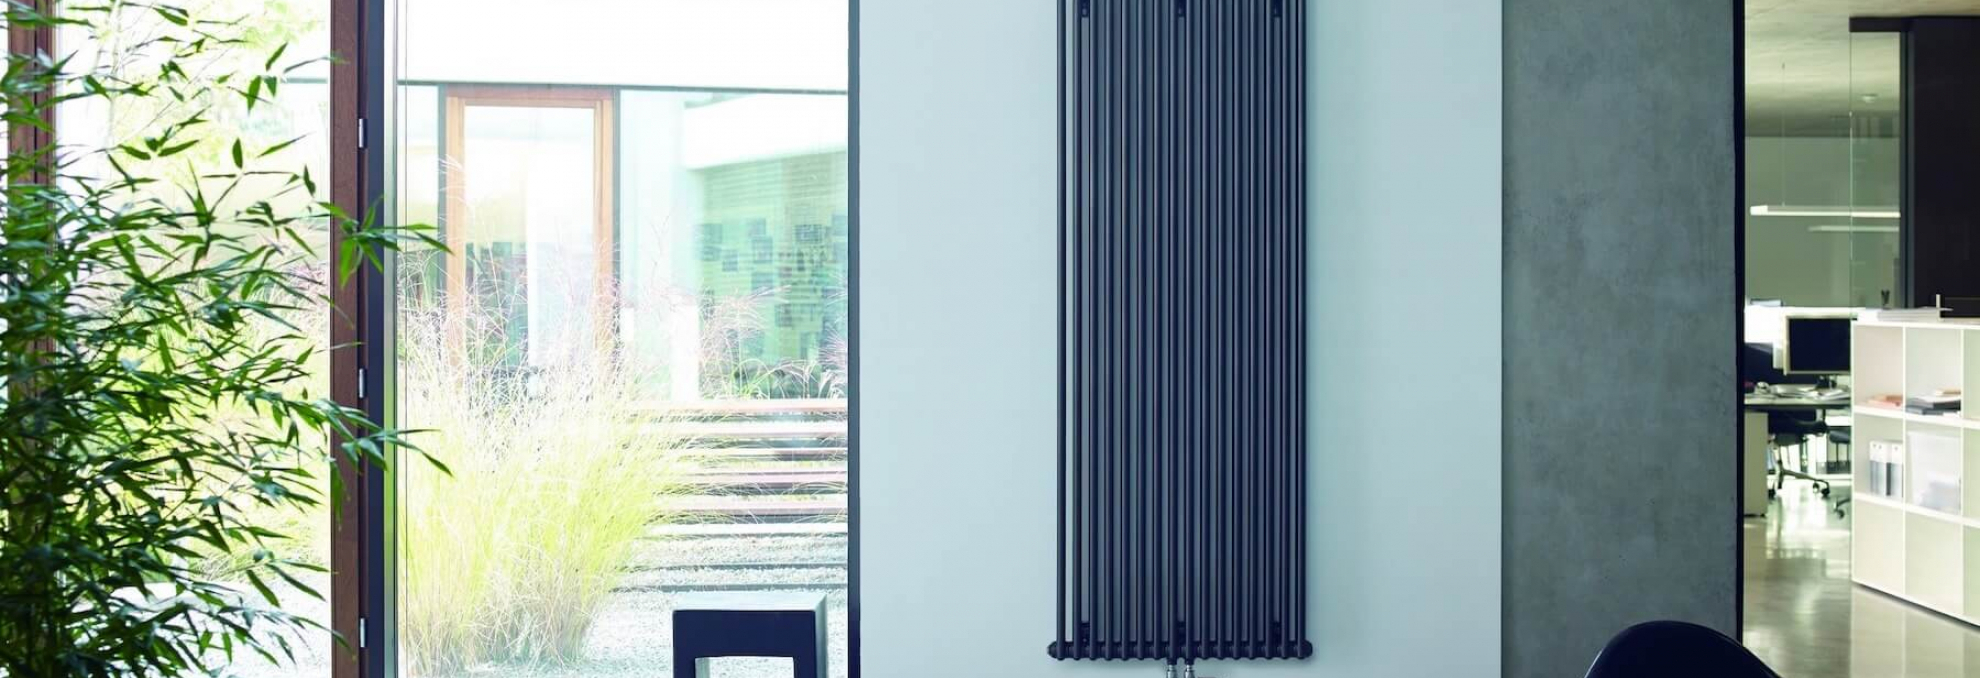 Designový radiátor Zehnder Charleston v interiéru